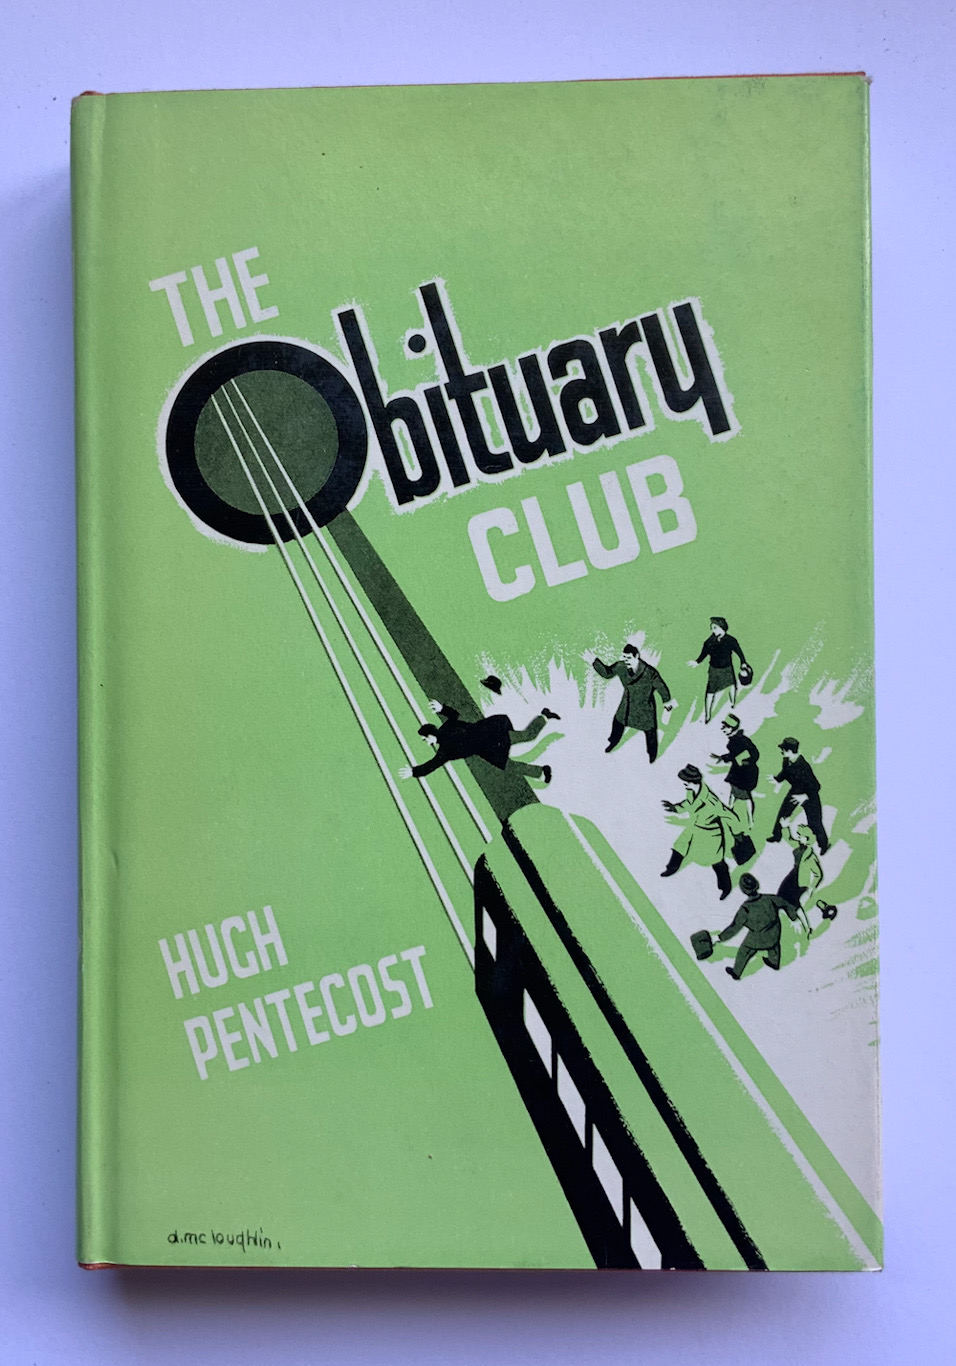 THE OBITUARY CLUB British crime book 1959